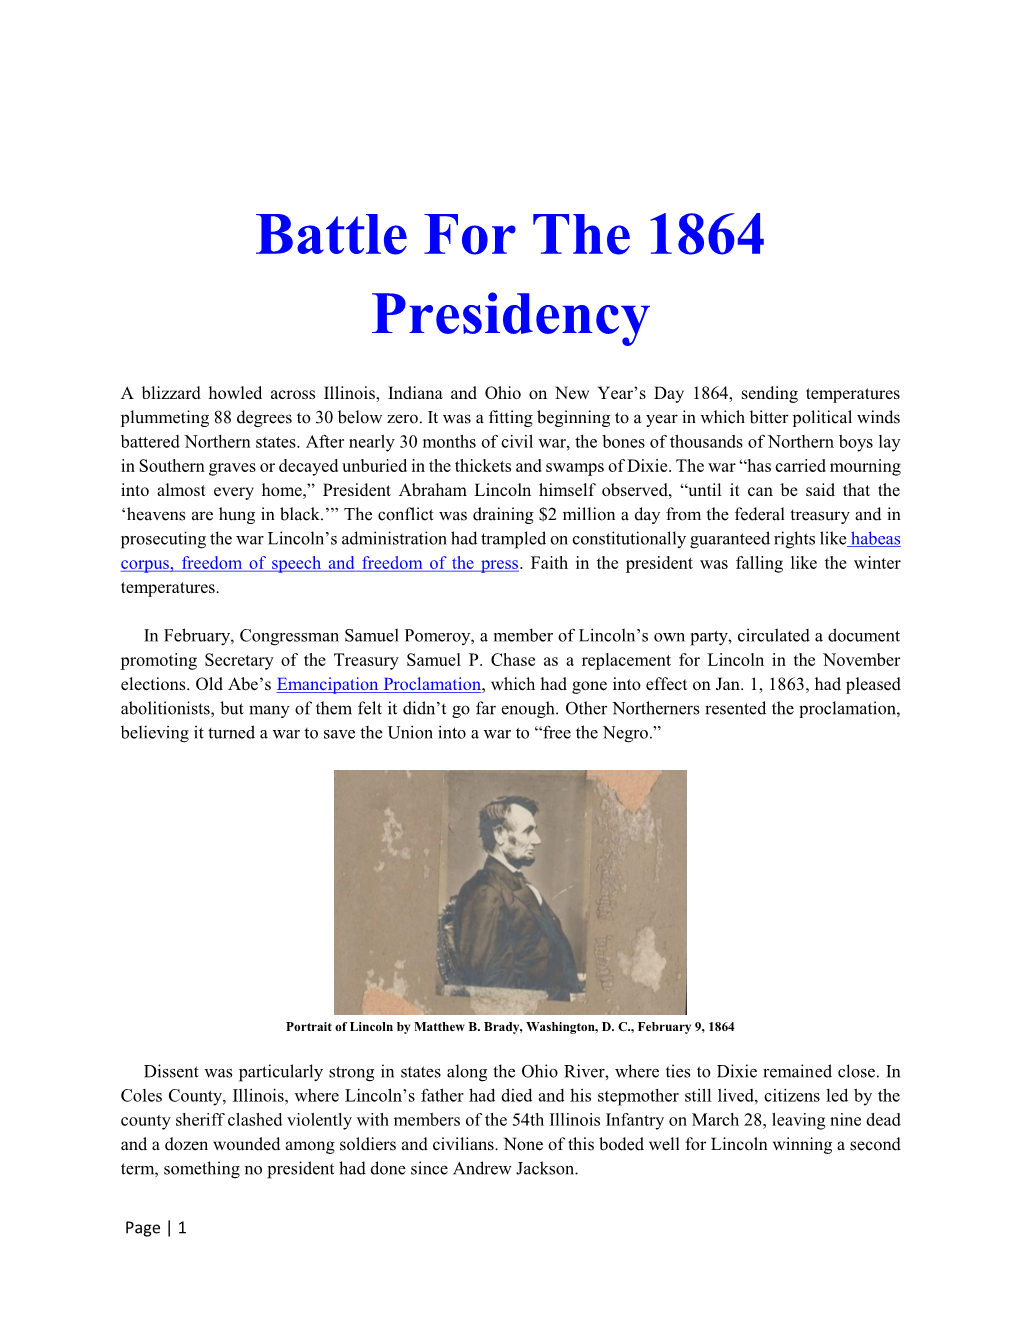 CW Battle for the 1864 Presidency